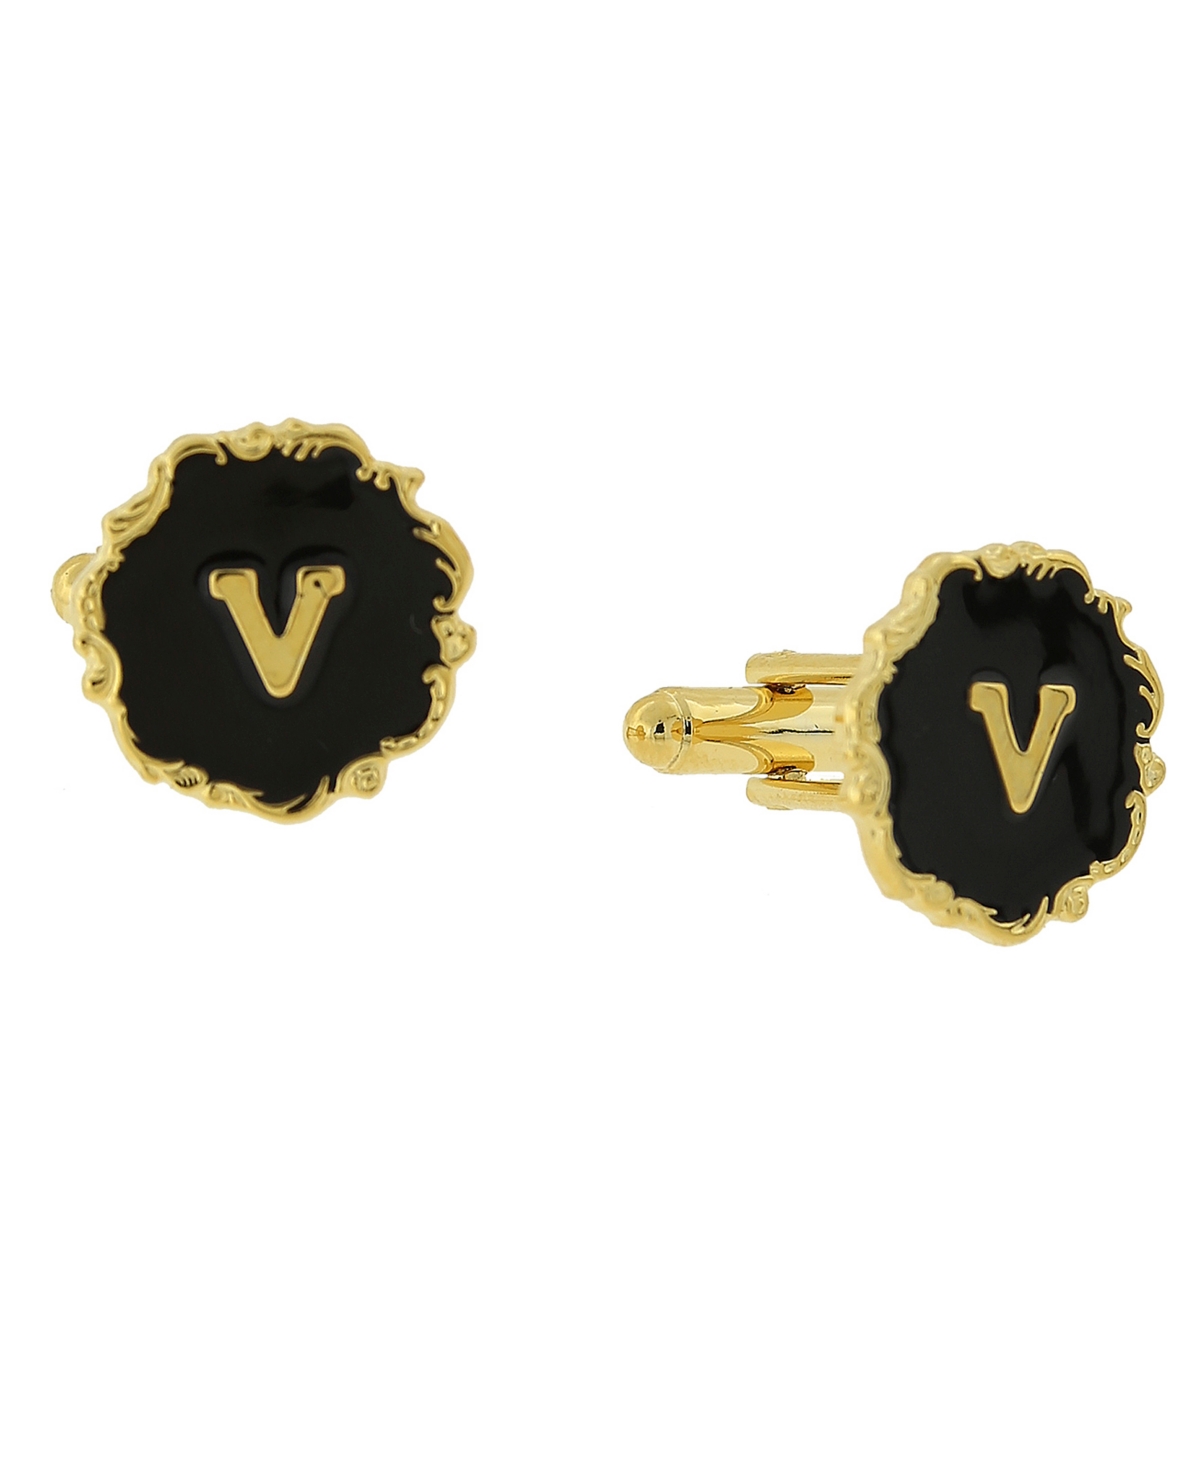 1928 Jewelry 14k Gold-plated Enamel Initial V Cufflinks In Black